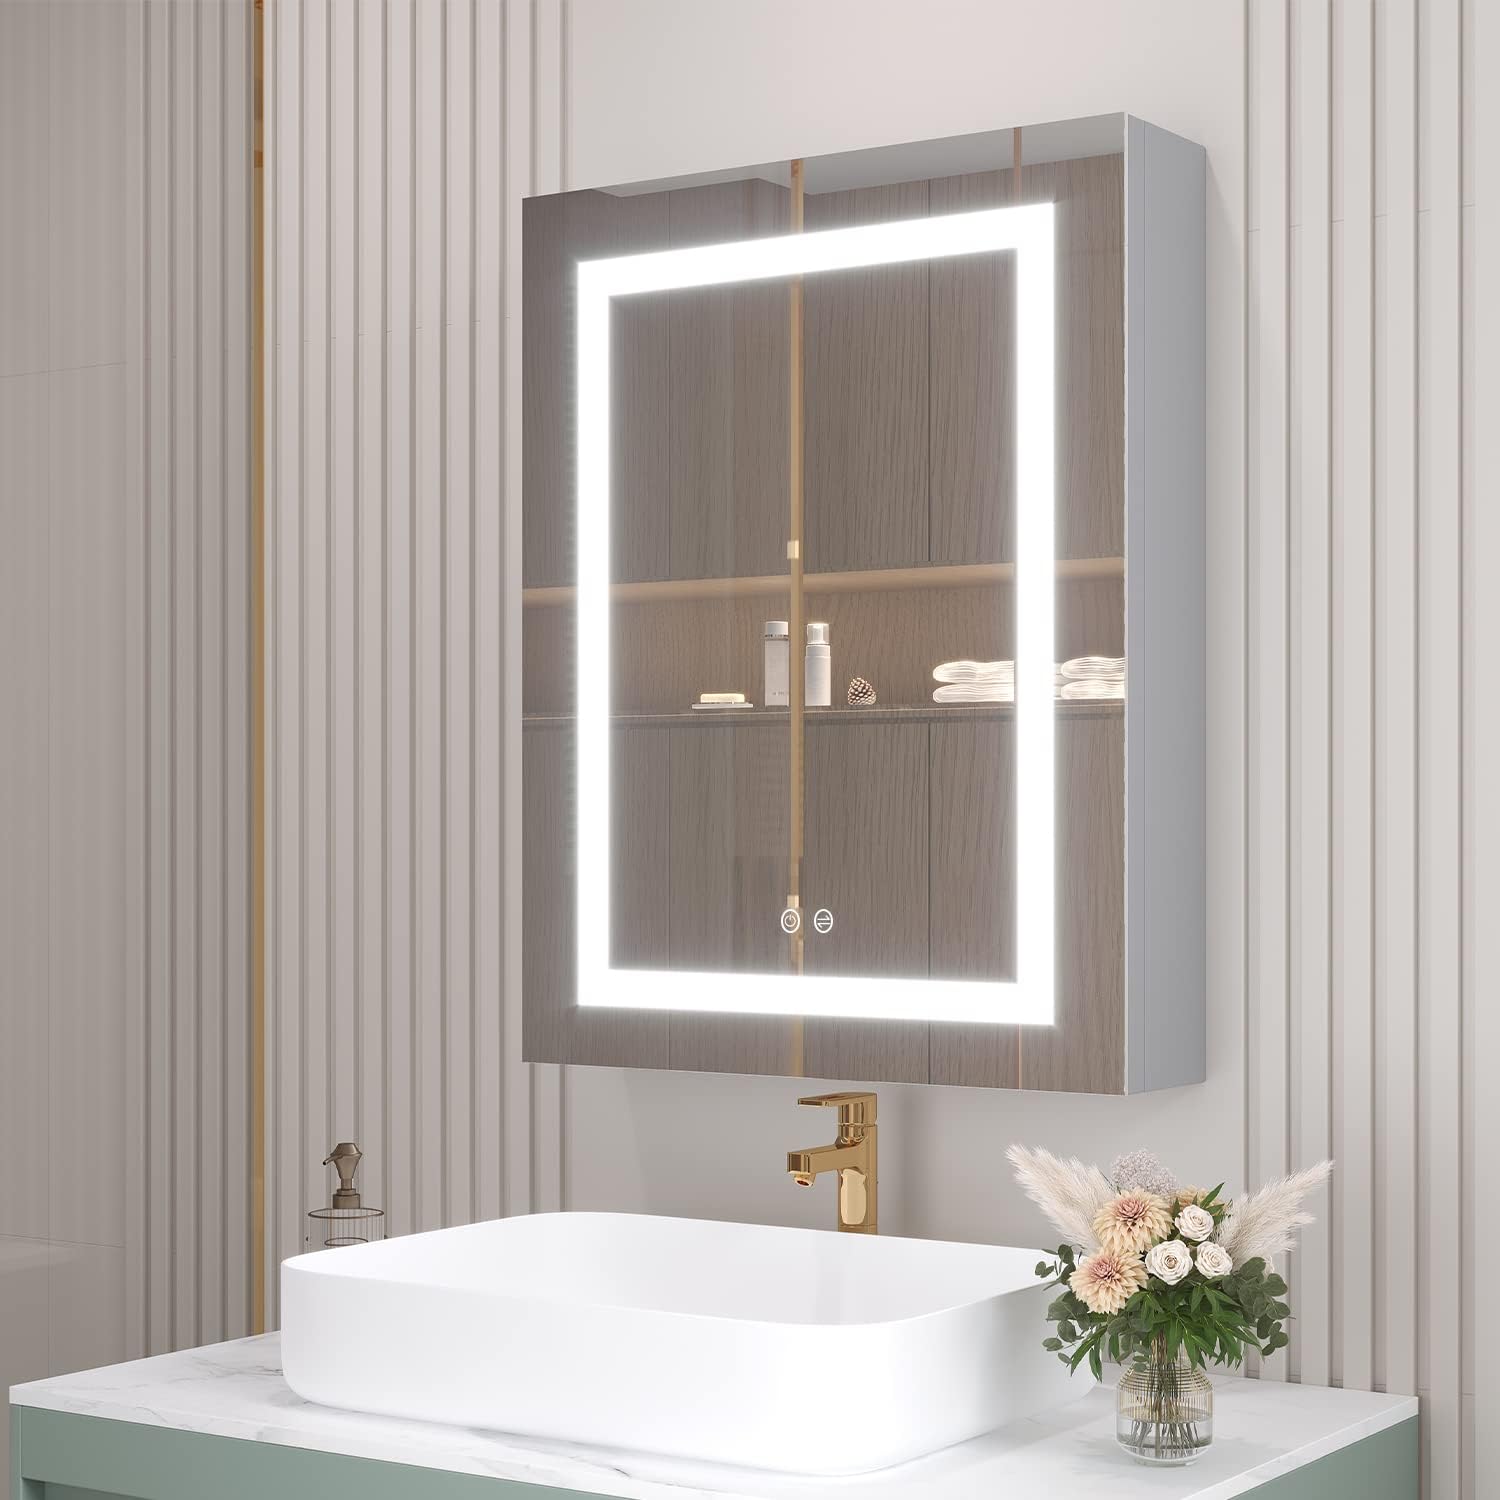 MIRPLUS 26x20 inch Bathroom Medicine Cabinet with LED [...]